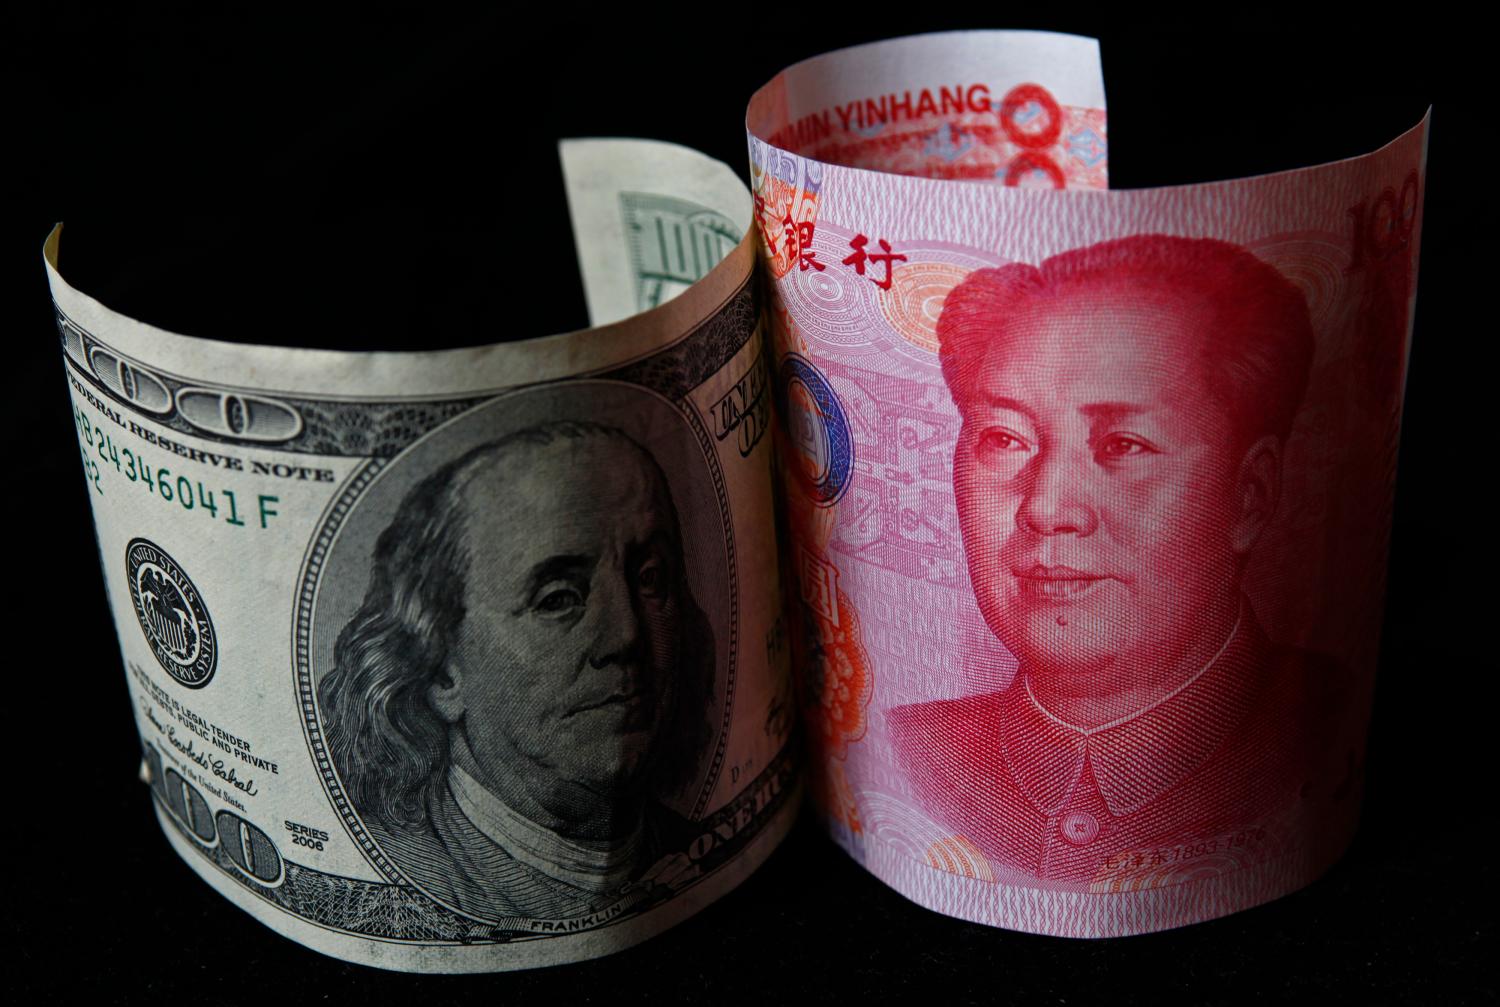 U.S. dollar and Chinese yuan